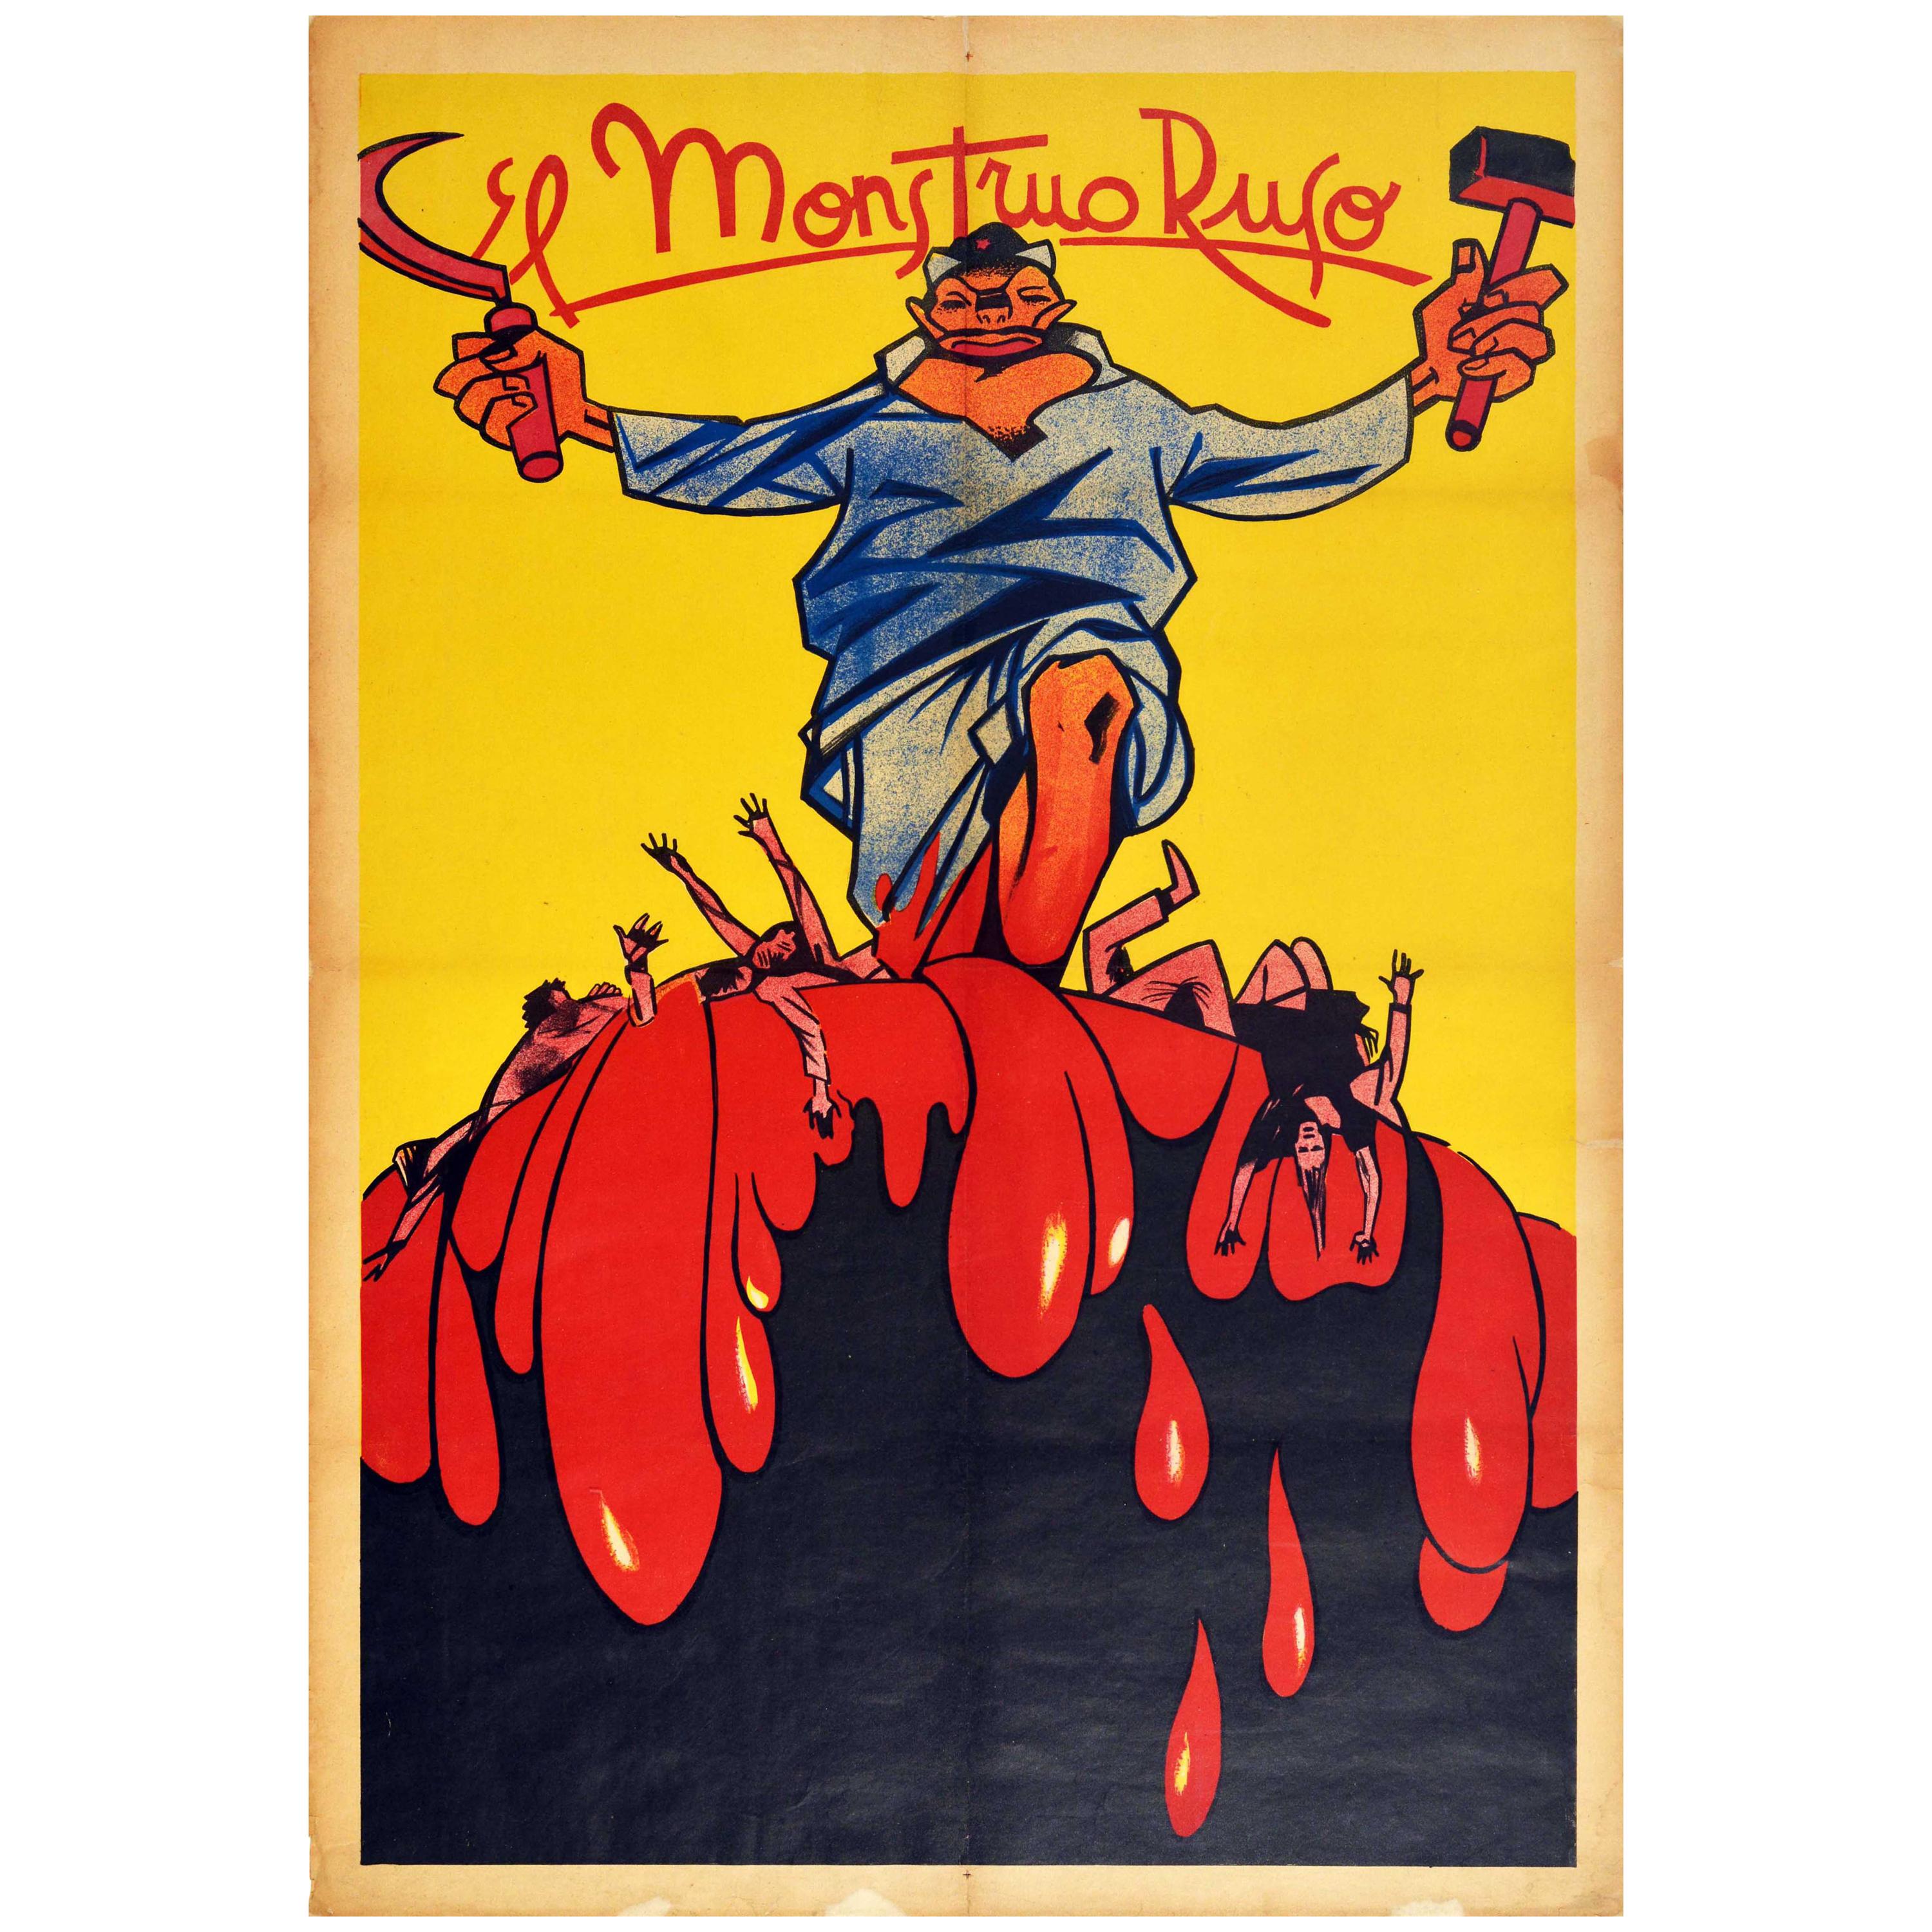 Original Vintage Spanish Civil War Poster El Monstruo Ruso The Russian Monster